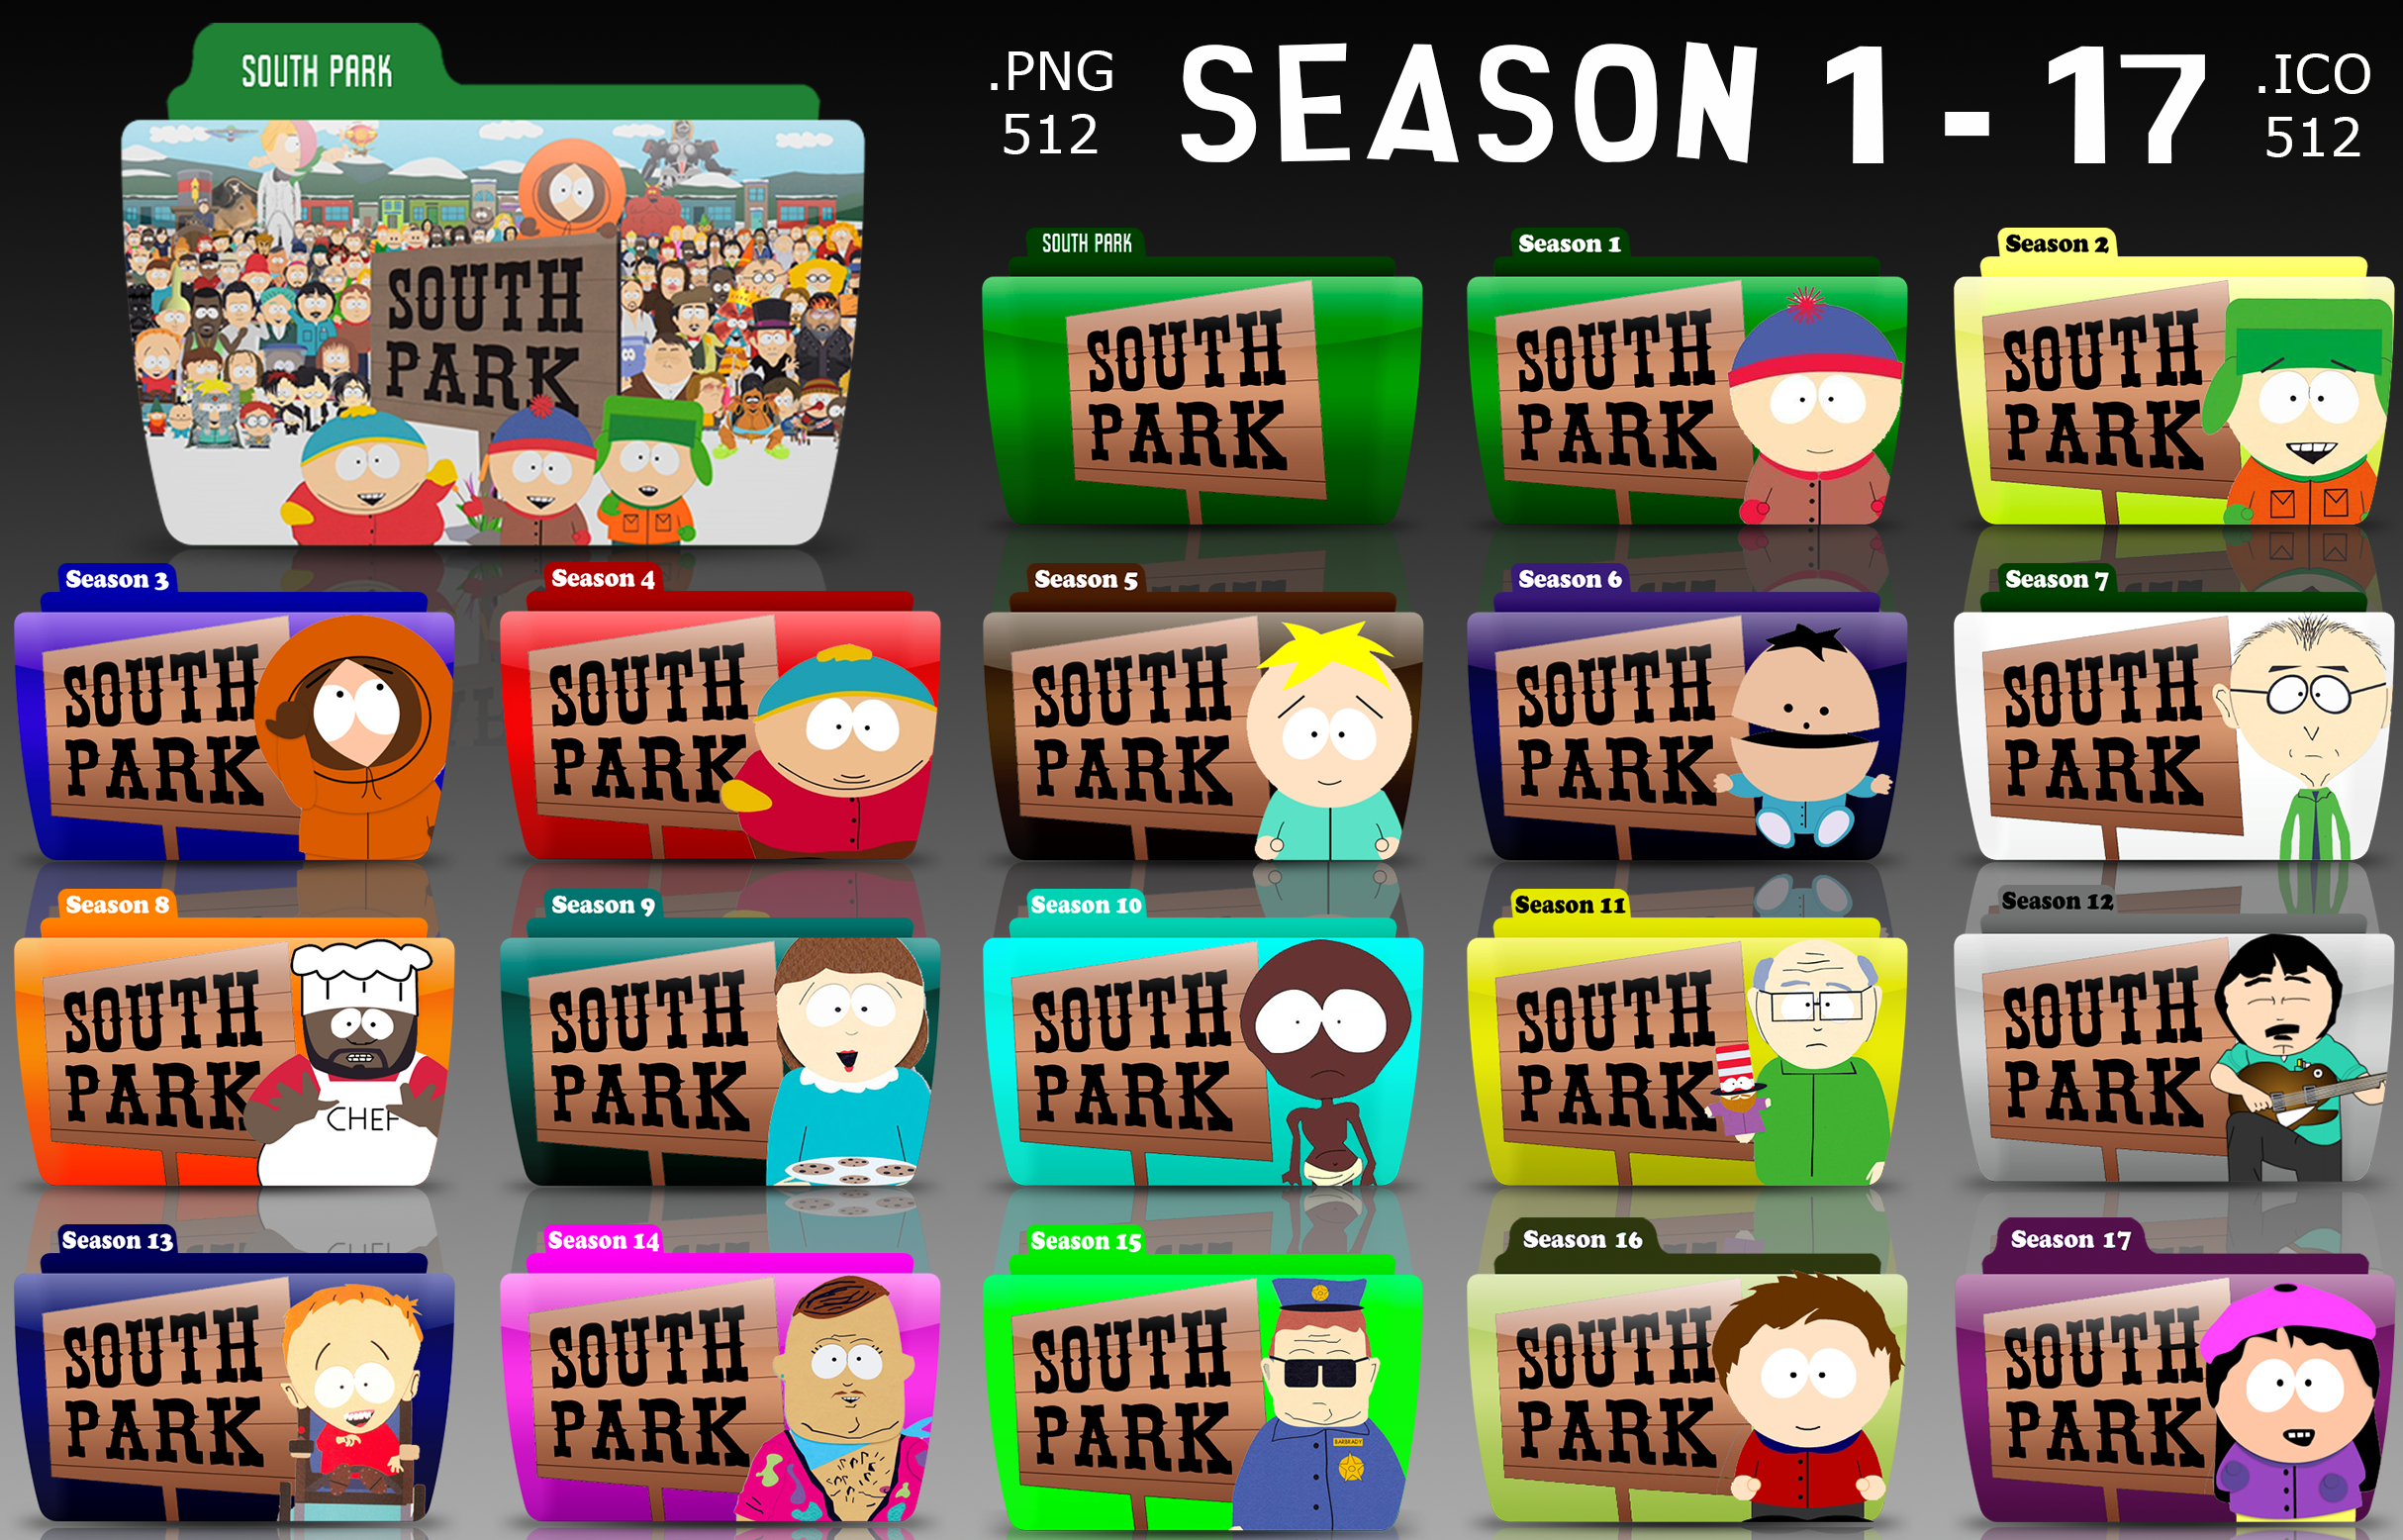 Chef Aid: The South Park Album - South Park Songs